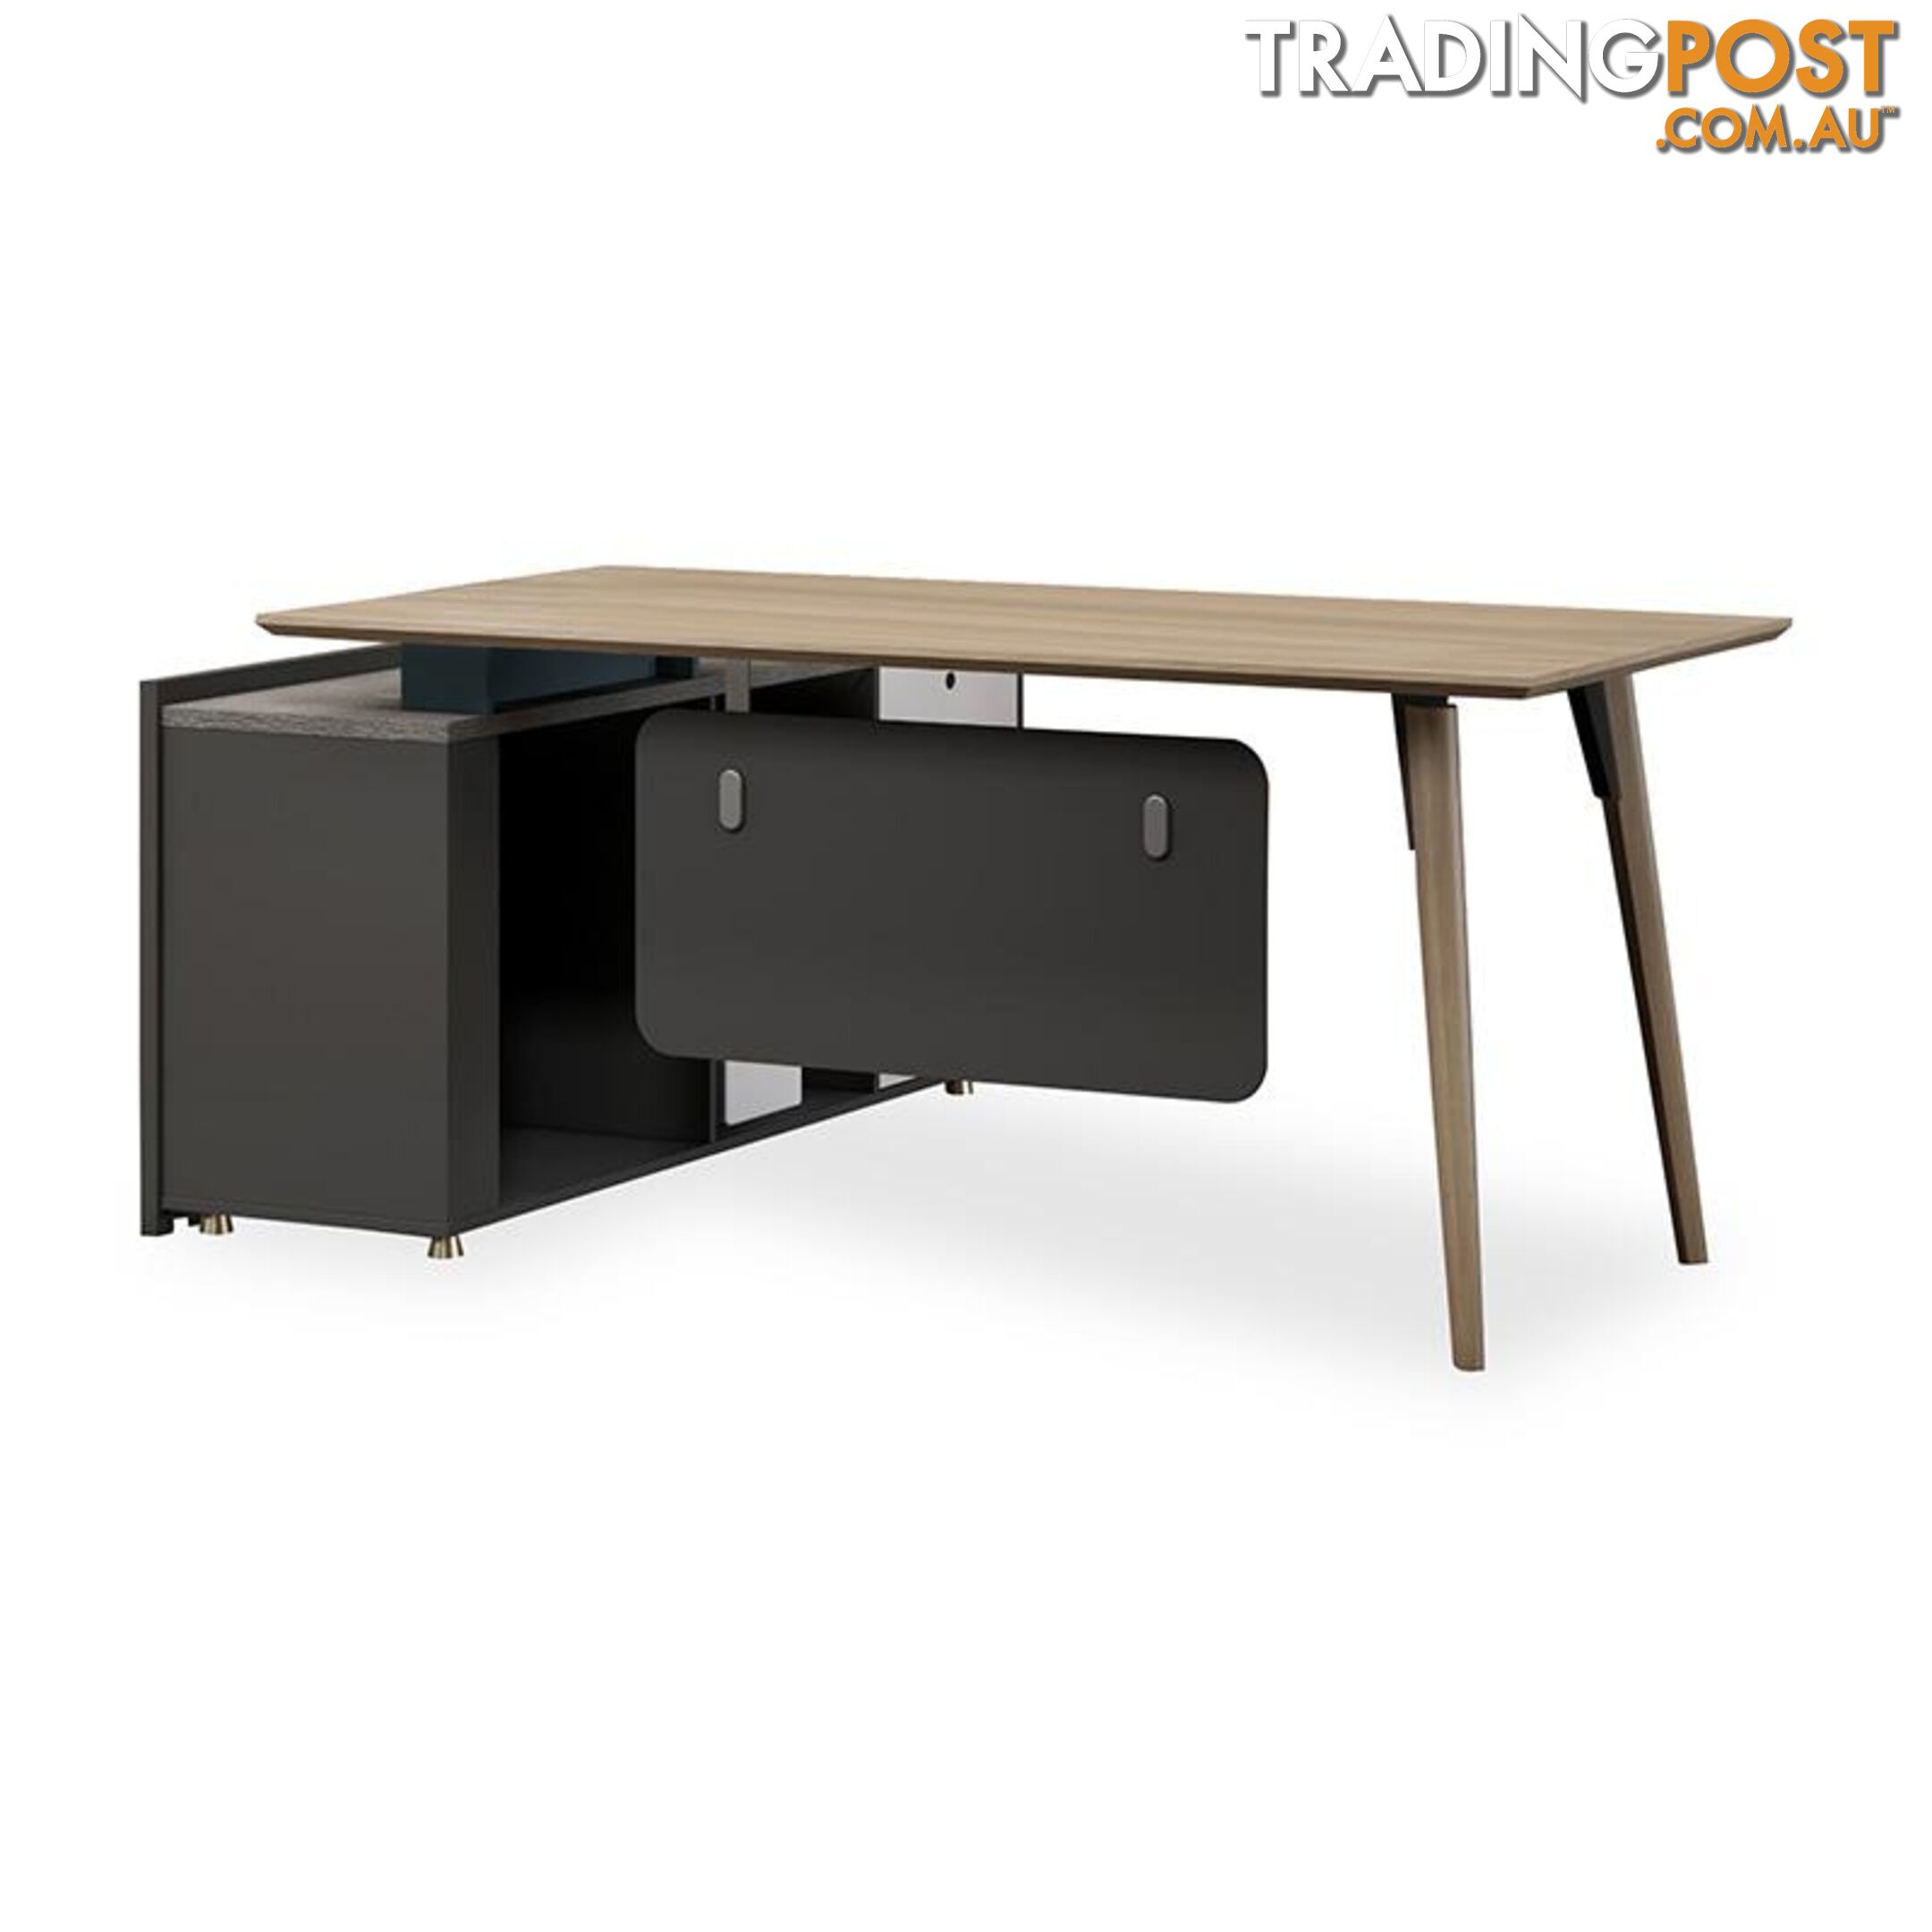 BAXTER Executive Desk Right Return 1.8M - Oak, Acacia Grey & Ivorie - MF-13NZJ004 - 9334719010380